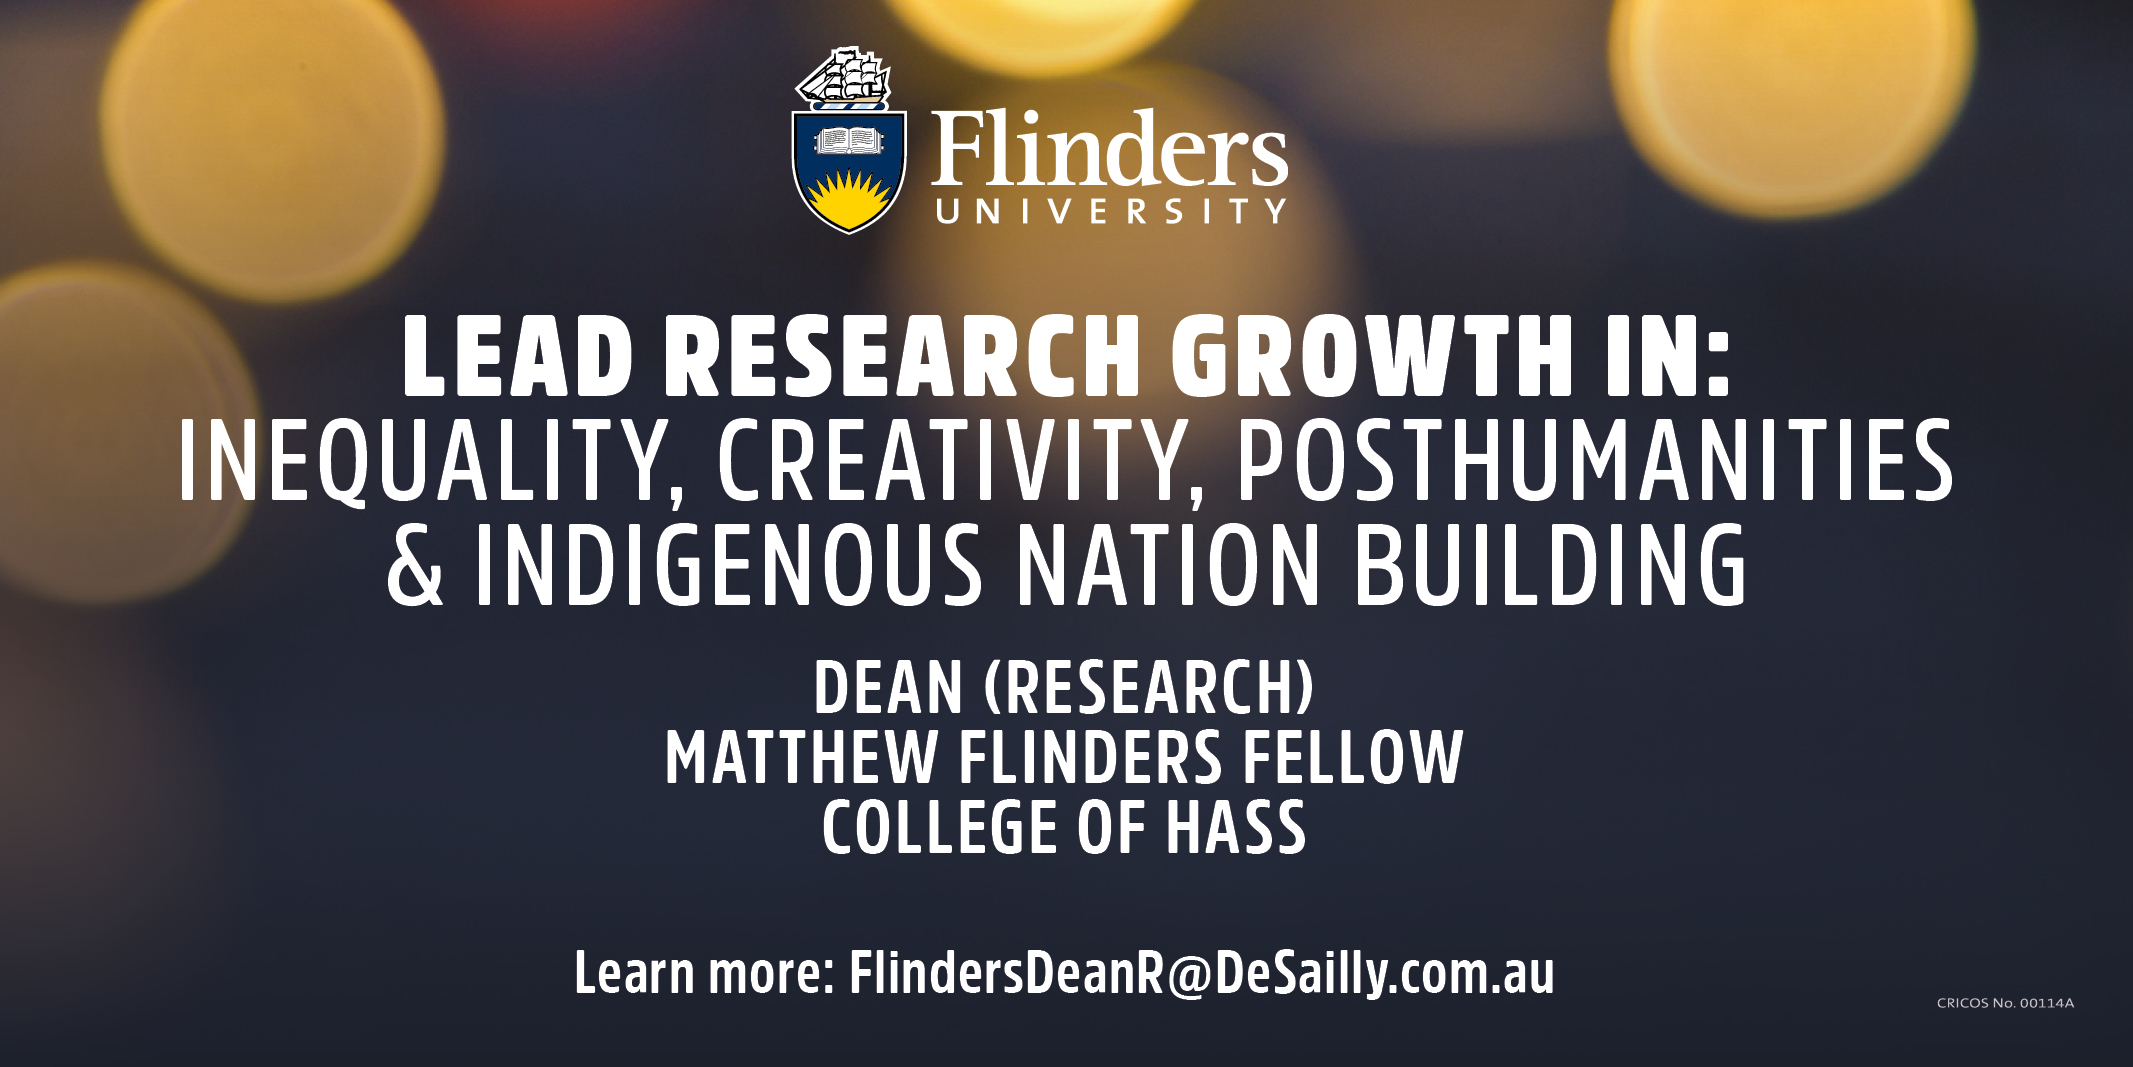 Dean (Research), Matthew Flinders Fellow, College of HASS